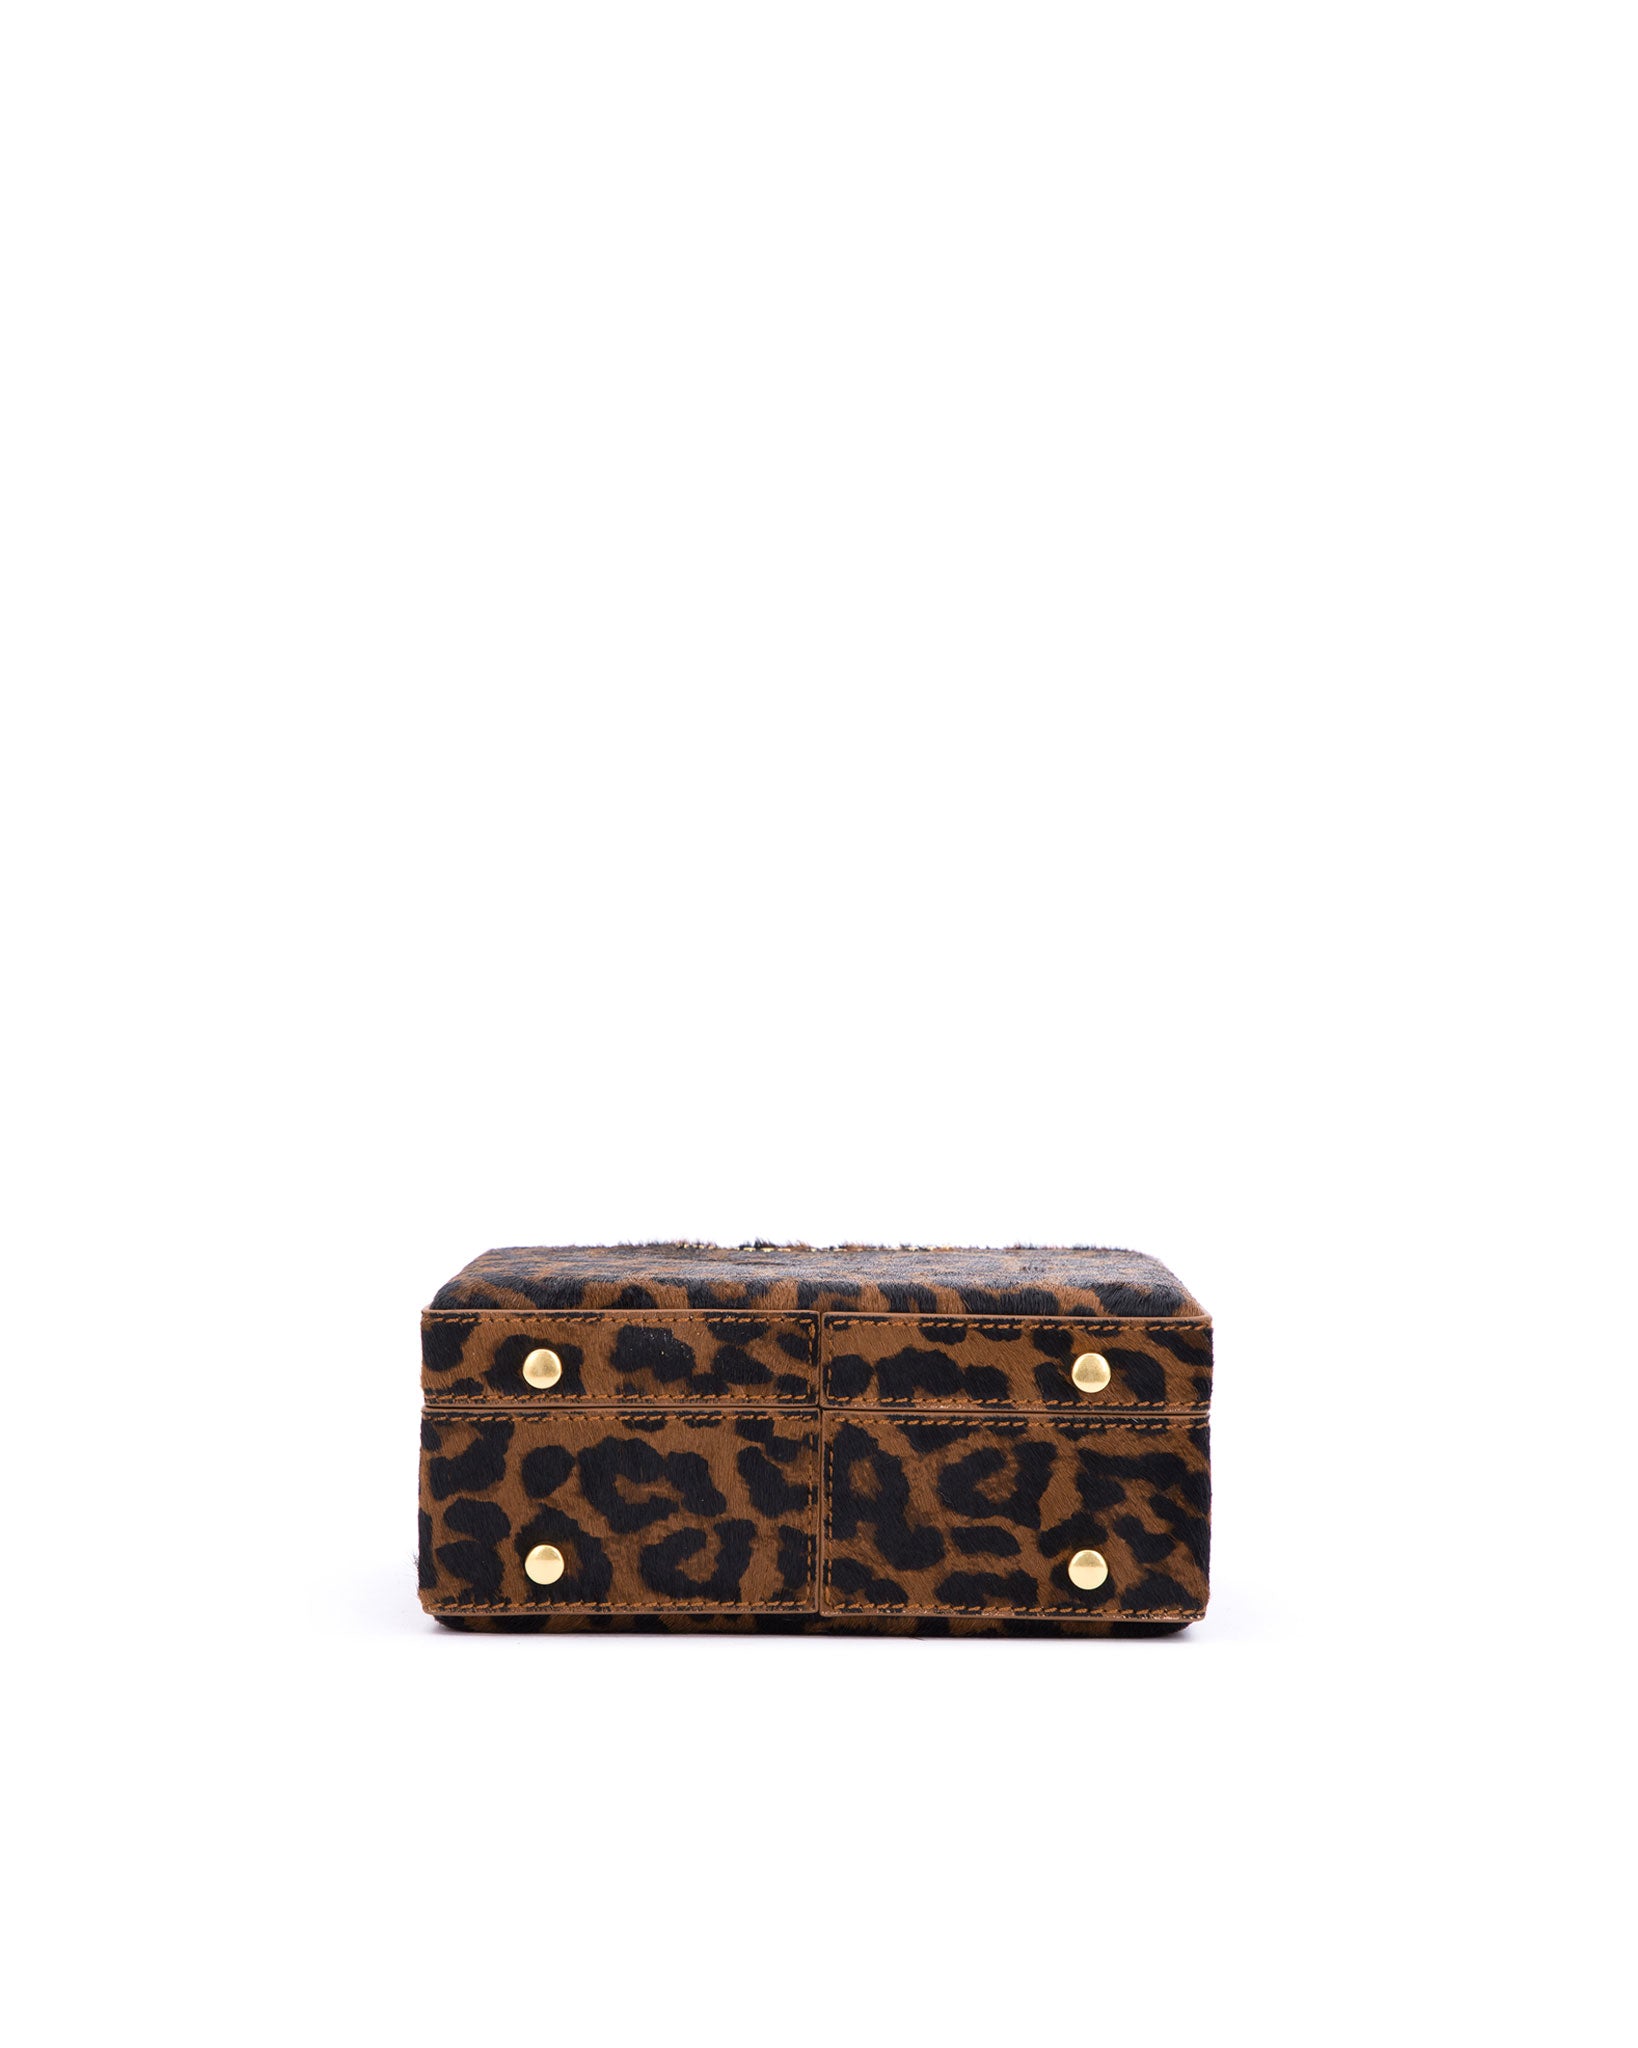 Leopard Hair on Hide 'Jordan' Crossbody with Genuine LV Patch by